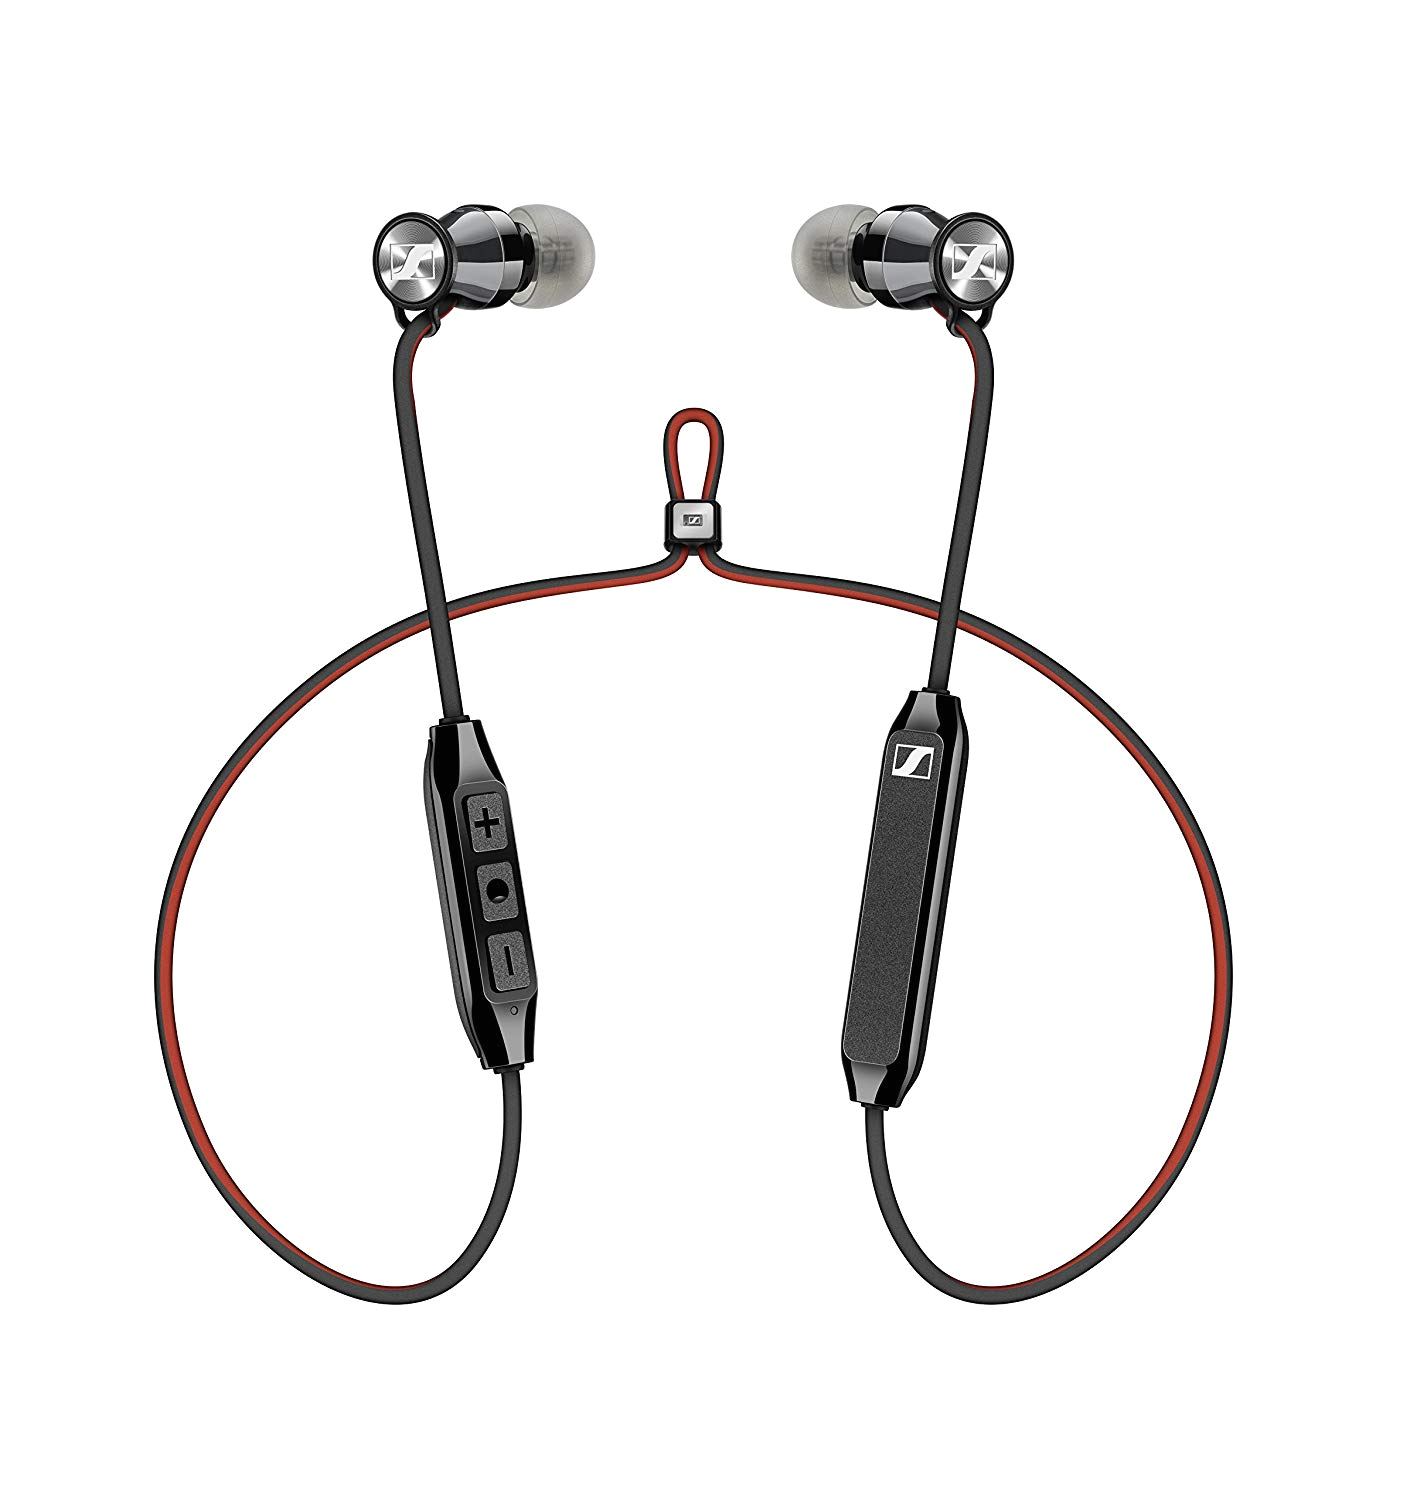 Sennheiser Headphone Wiring Diagram Sennheiser Momentum Free Wireless Bluetooth Headphones Amazon Co